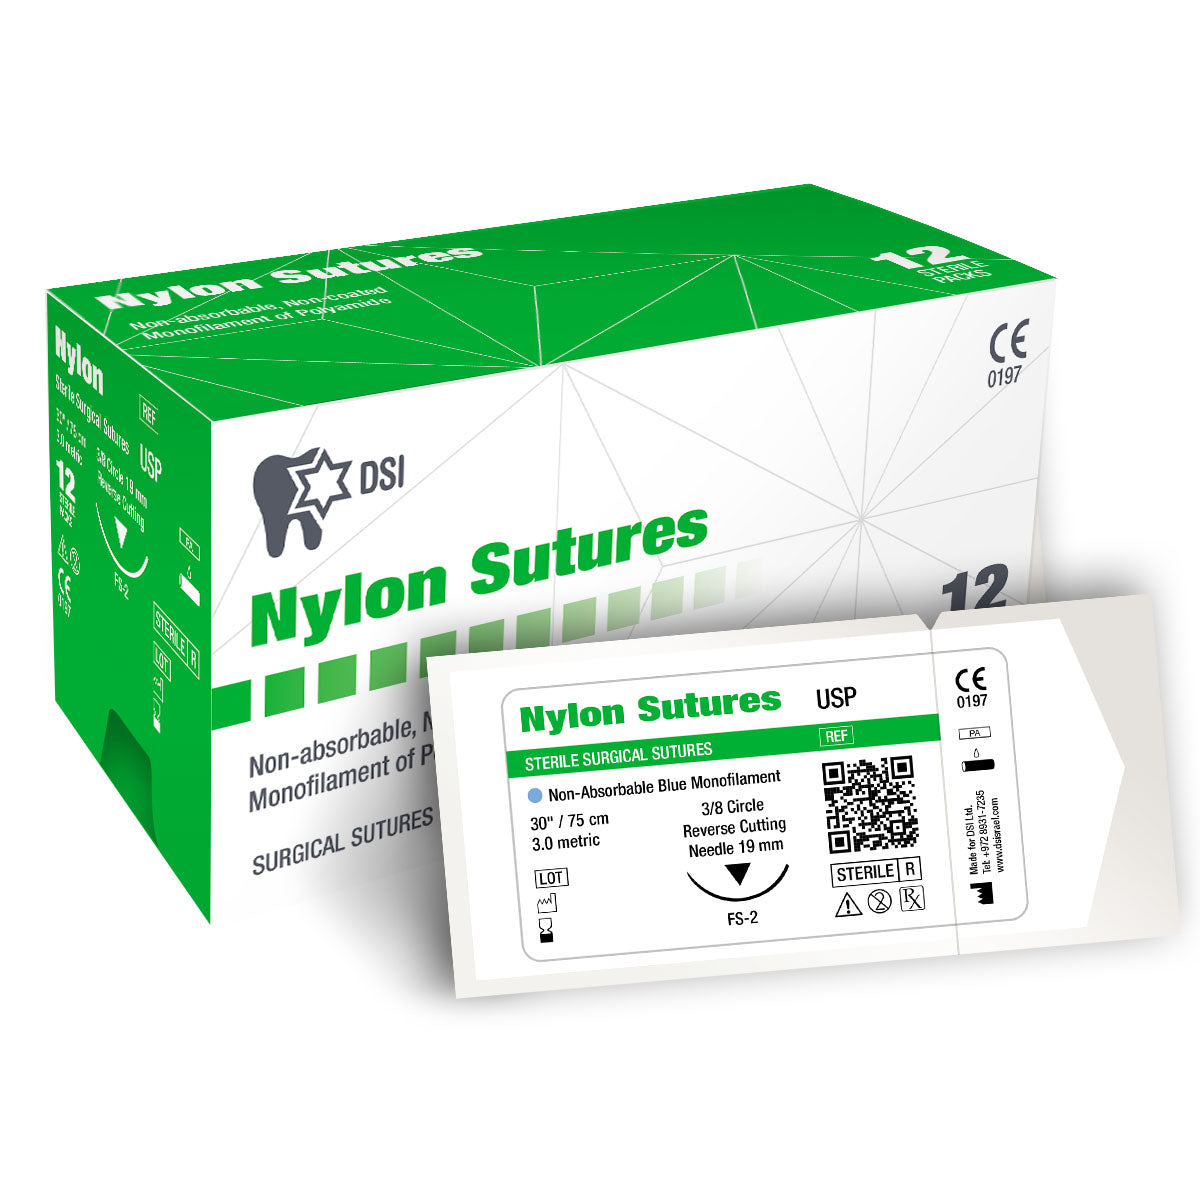 DSI Nylon Monofilament Non-resorbable Surgical Sutures 75cm 12pcs pack